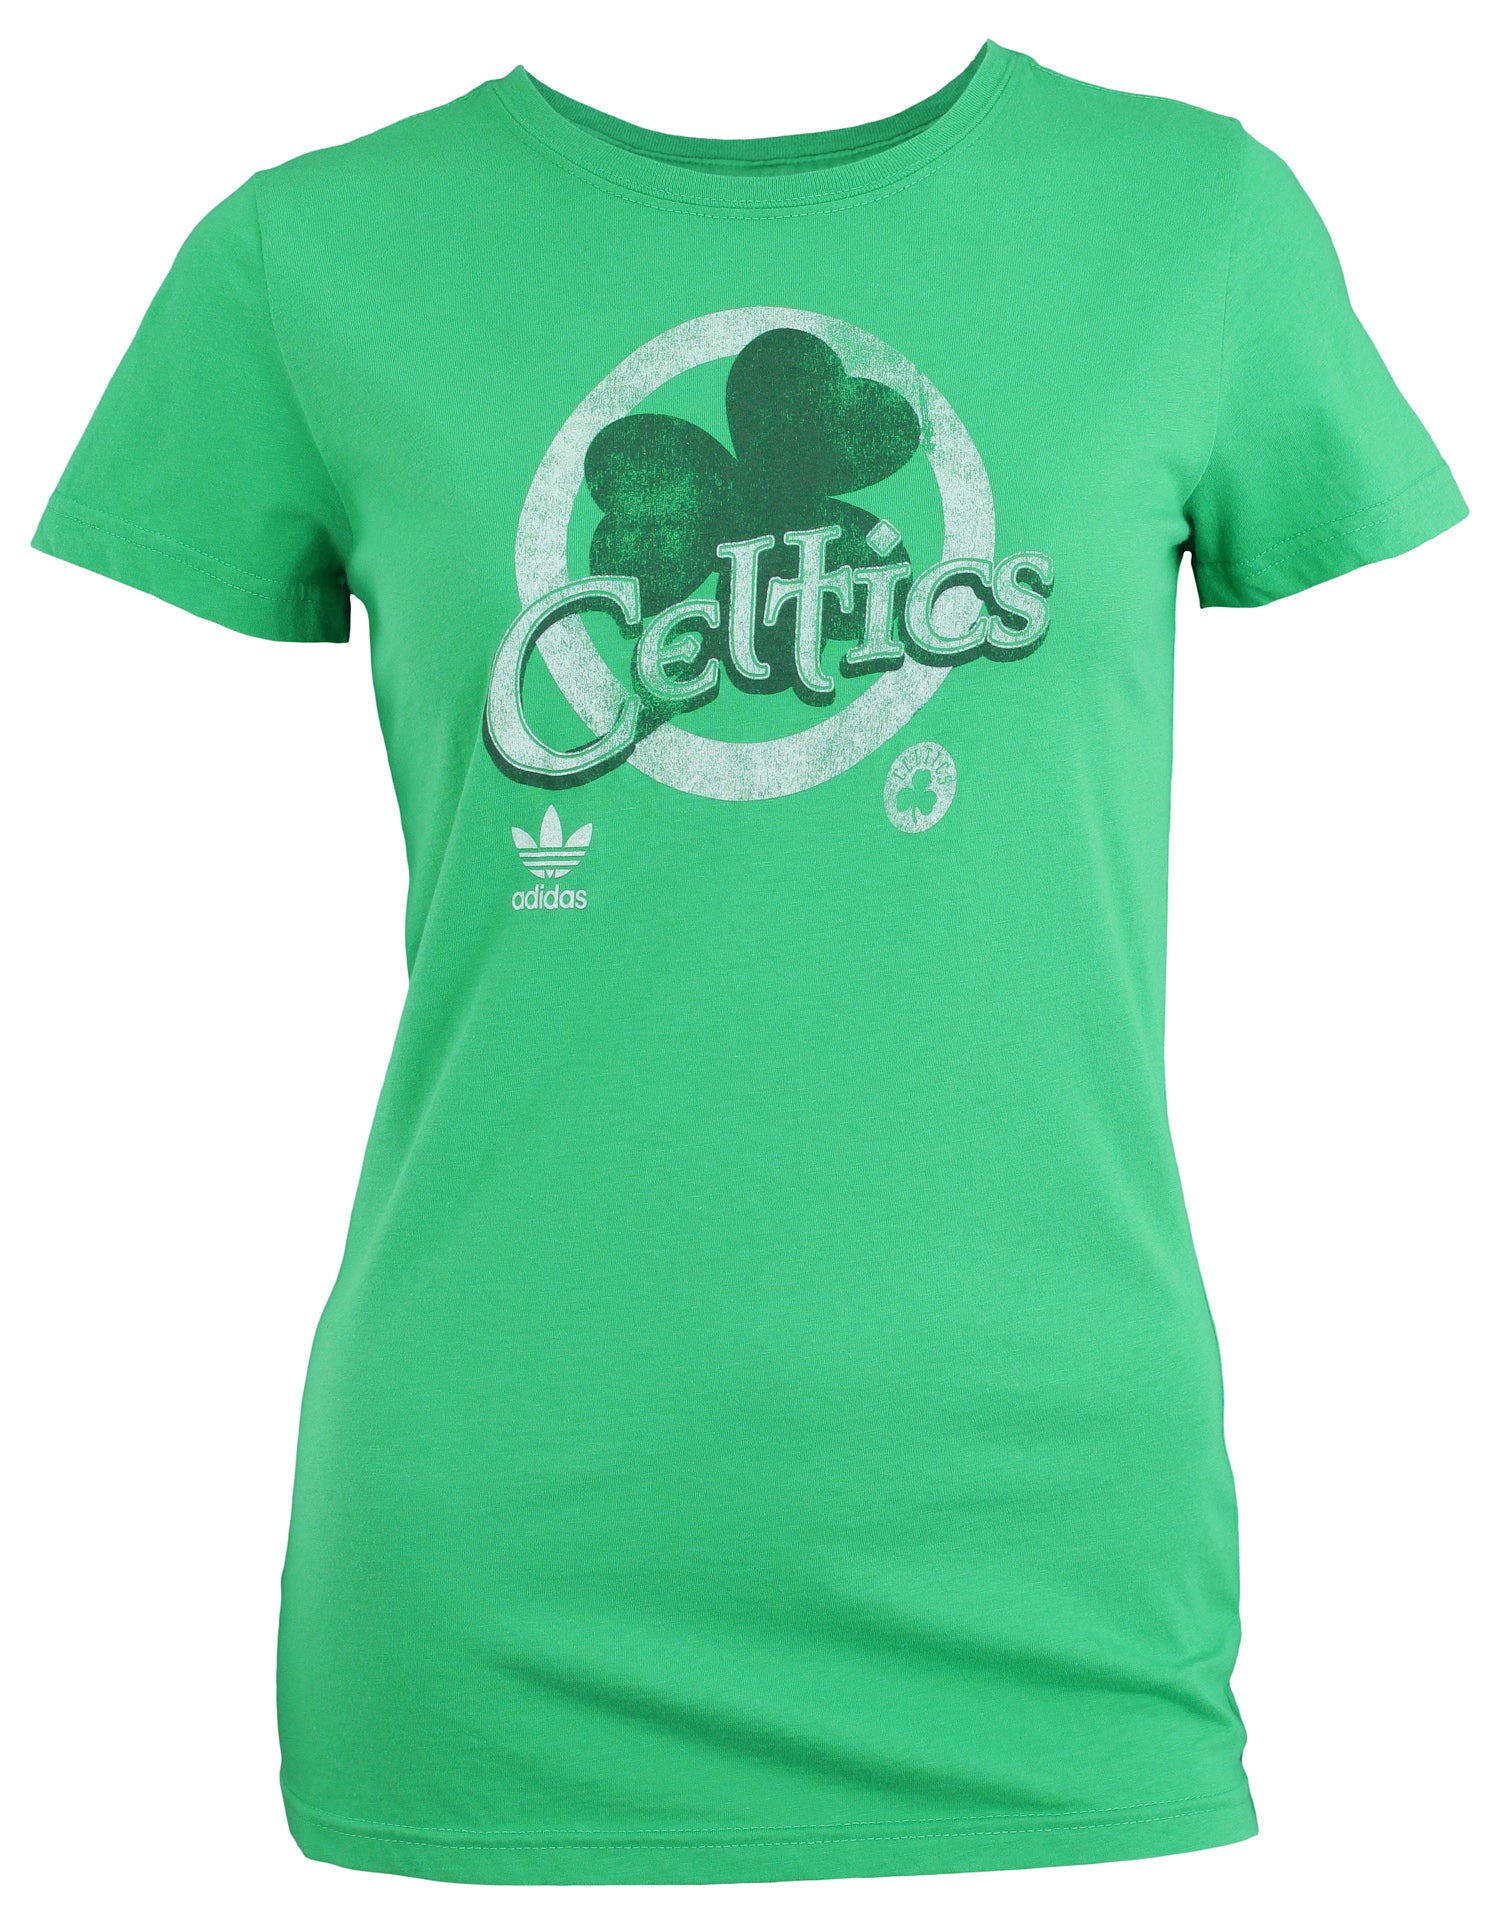 adidas celtics shirt